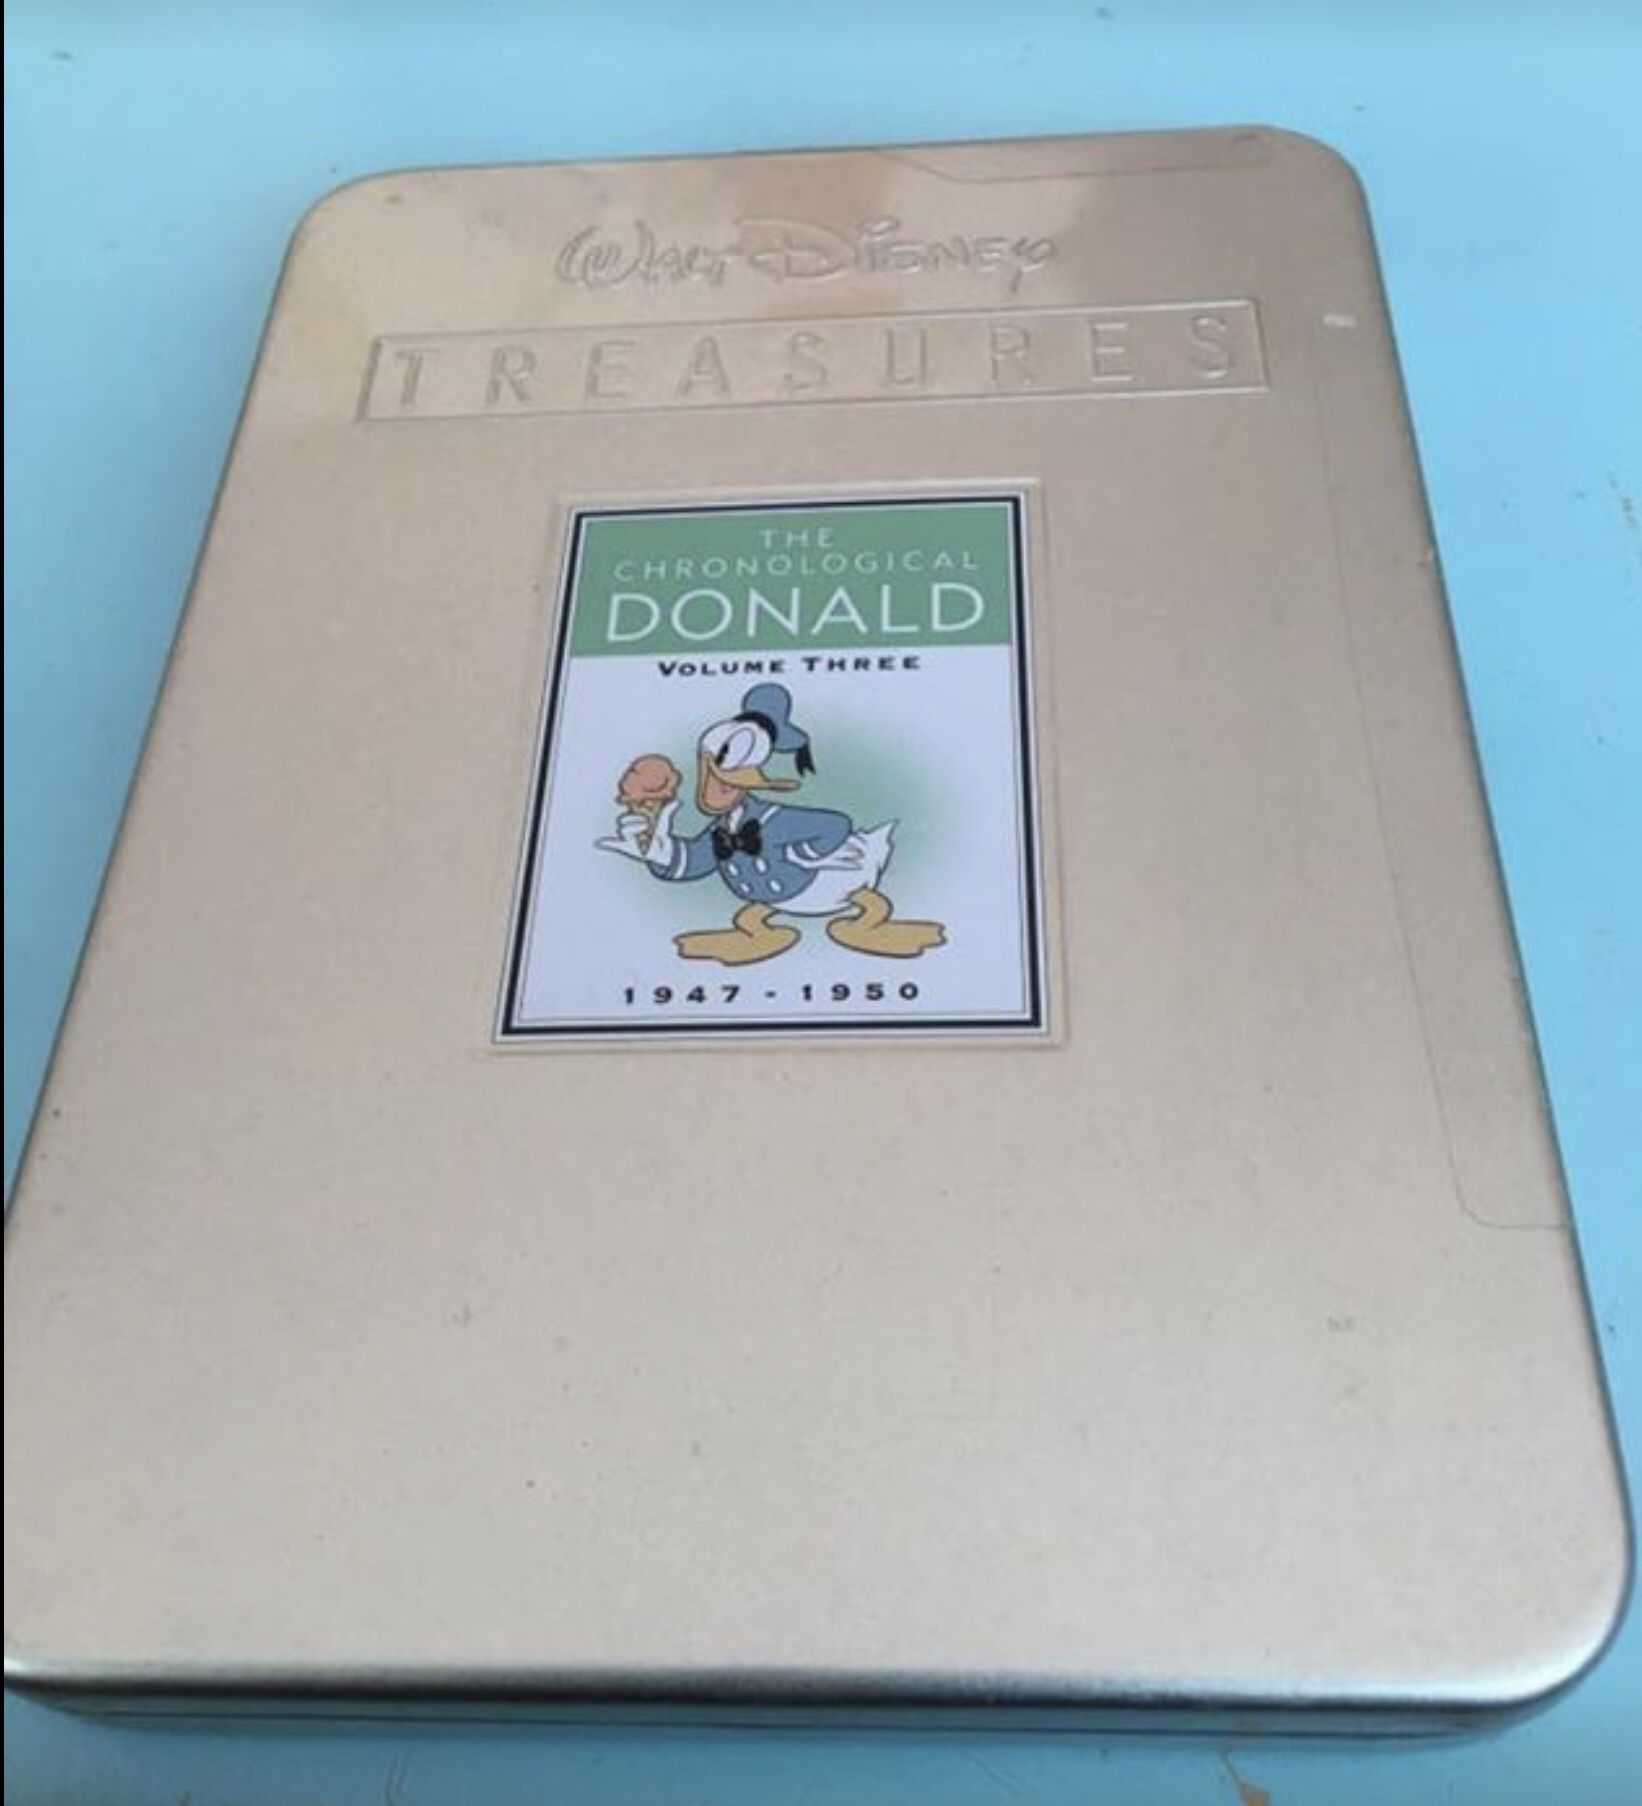 Walt Disney Treasures: The Chronological Donald cartoon dvd collection, Volume 3..